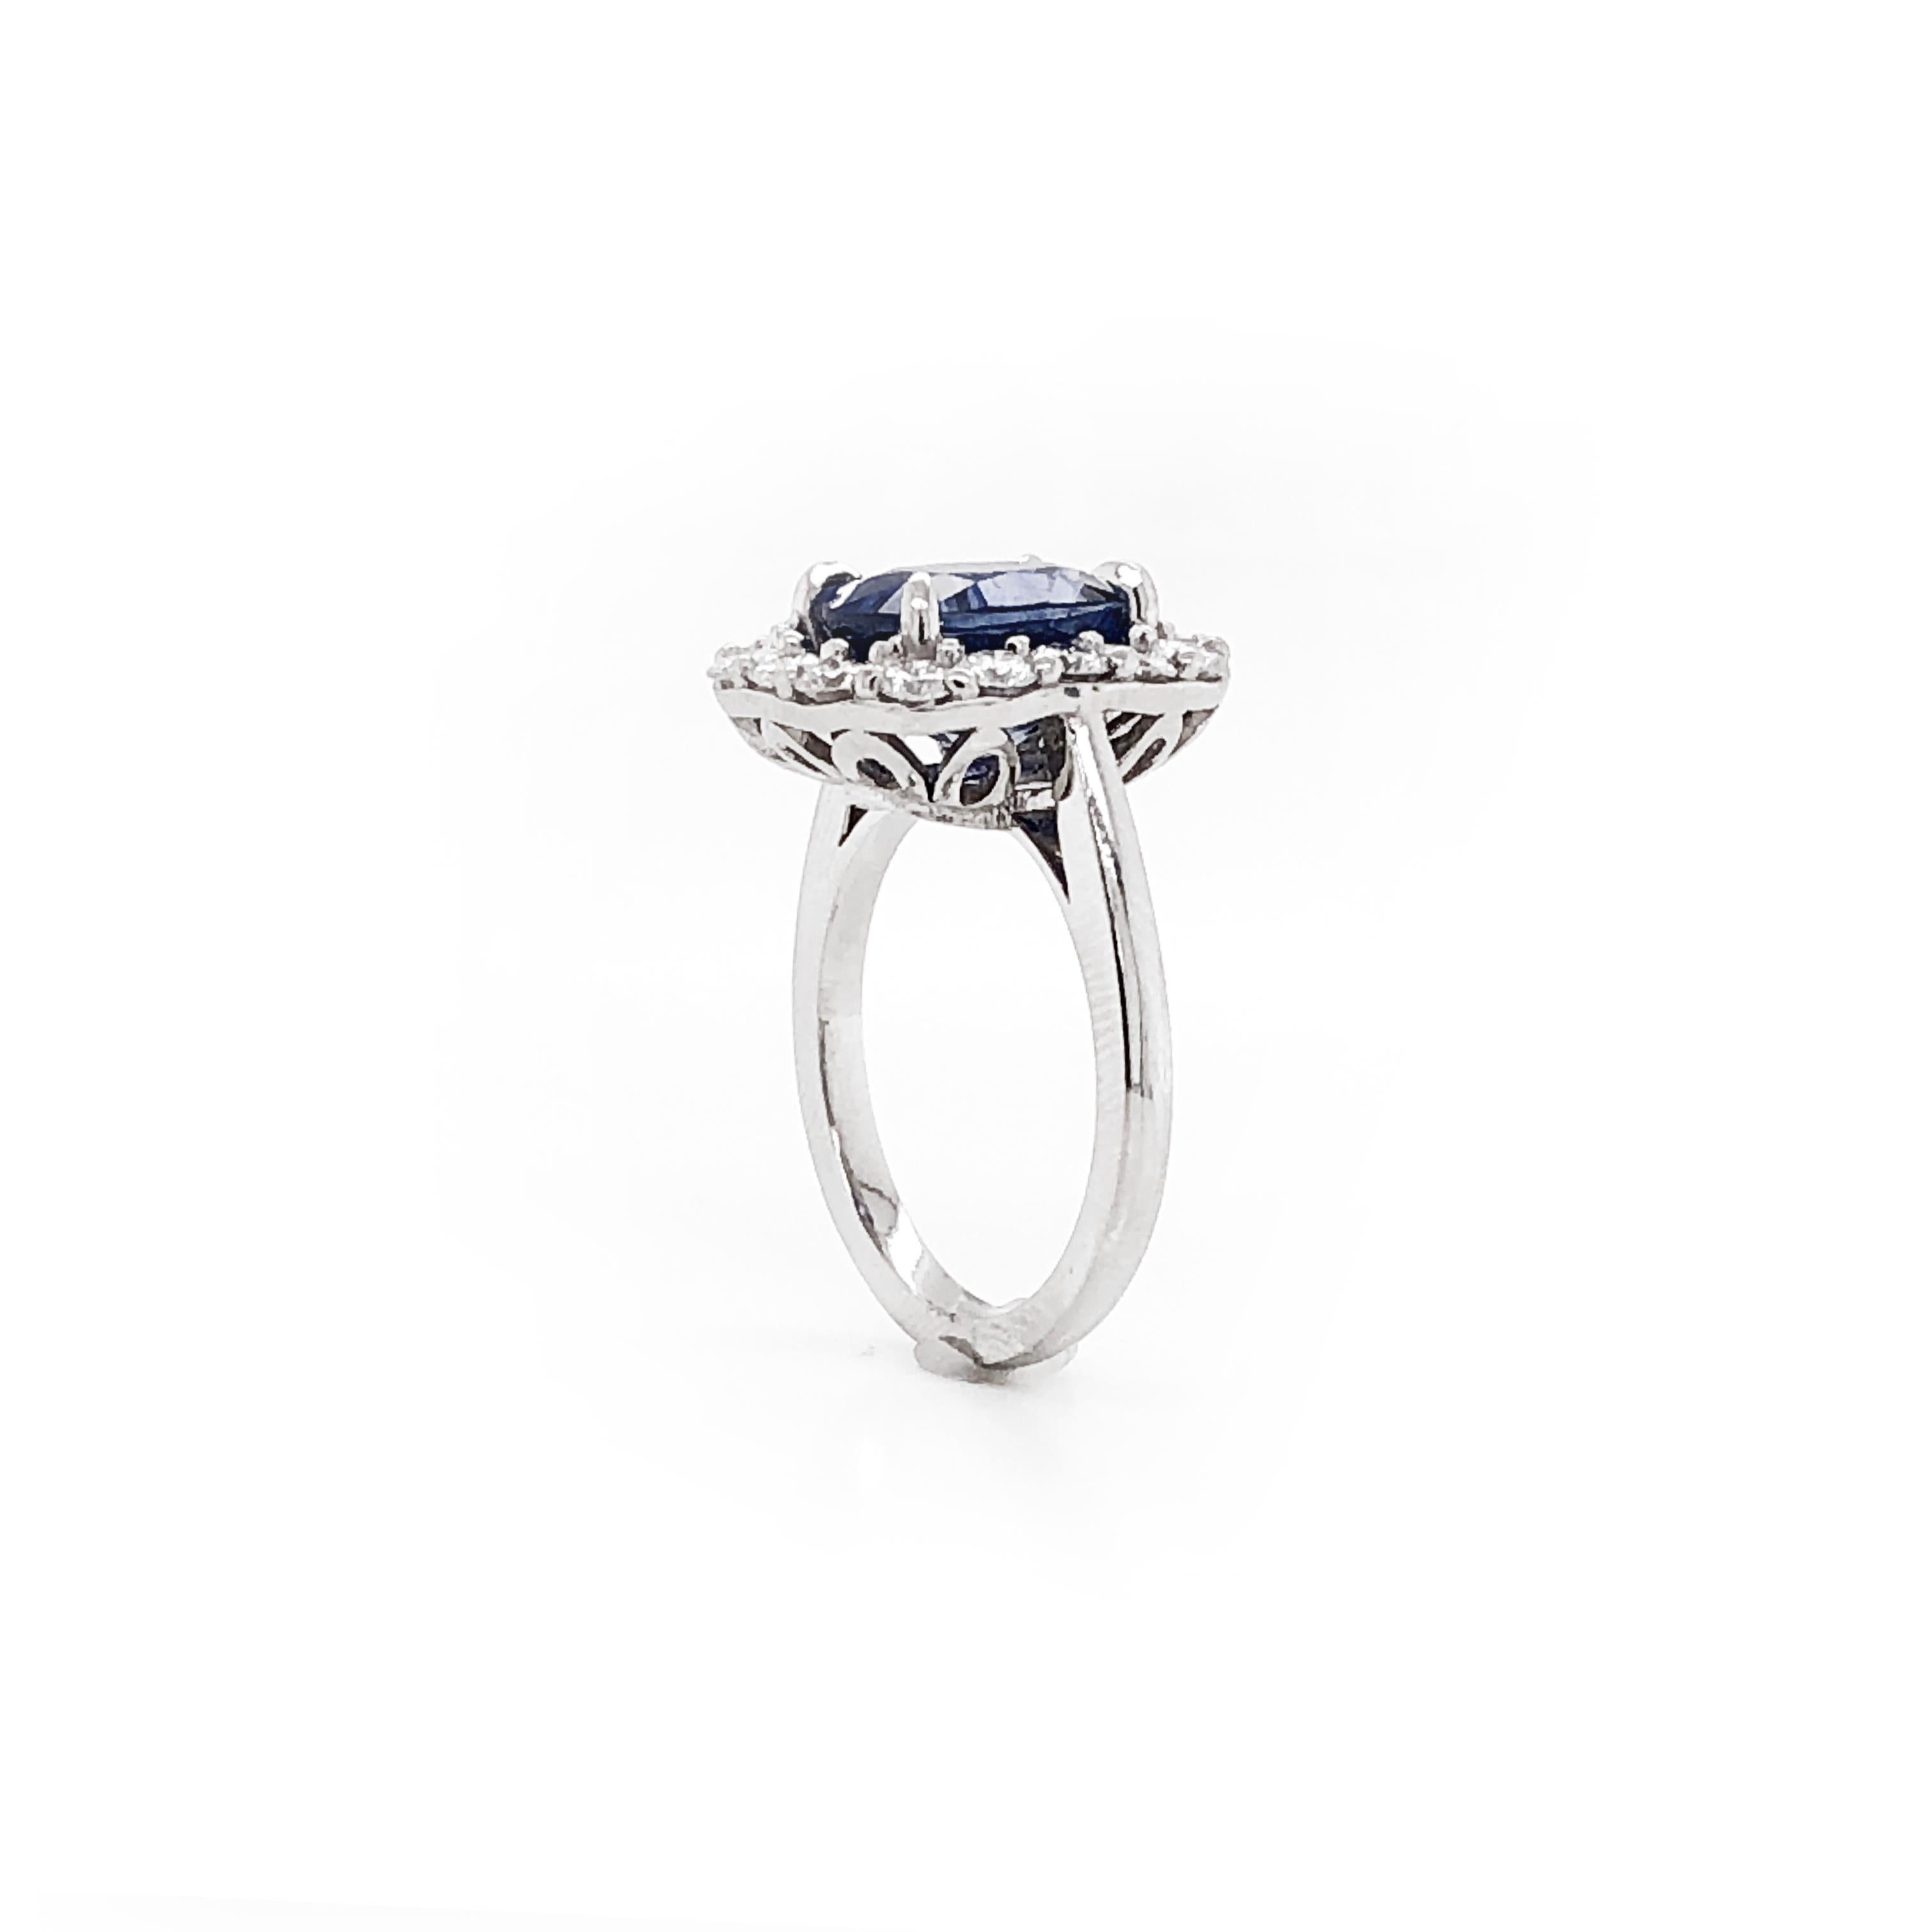 Cushion blue ceylon oval sapphire 4.69 ct round diamonds 1.28 ct platinum ring For Sale 1